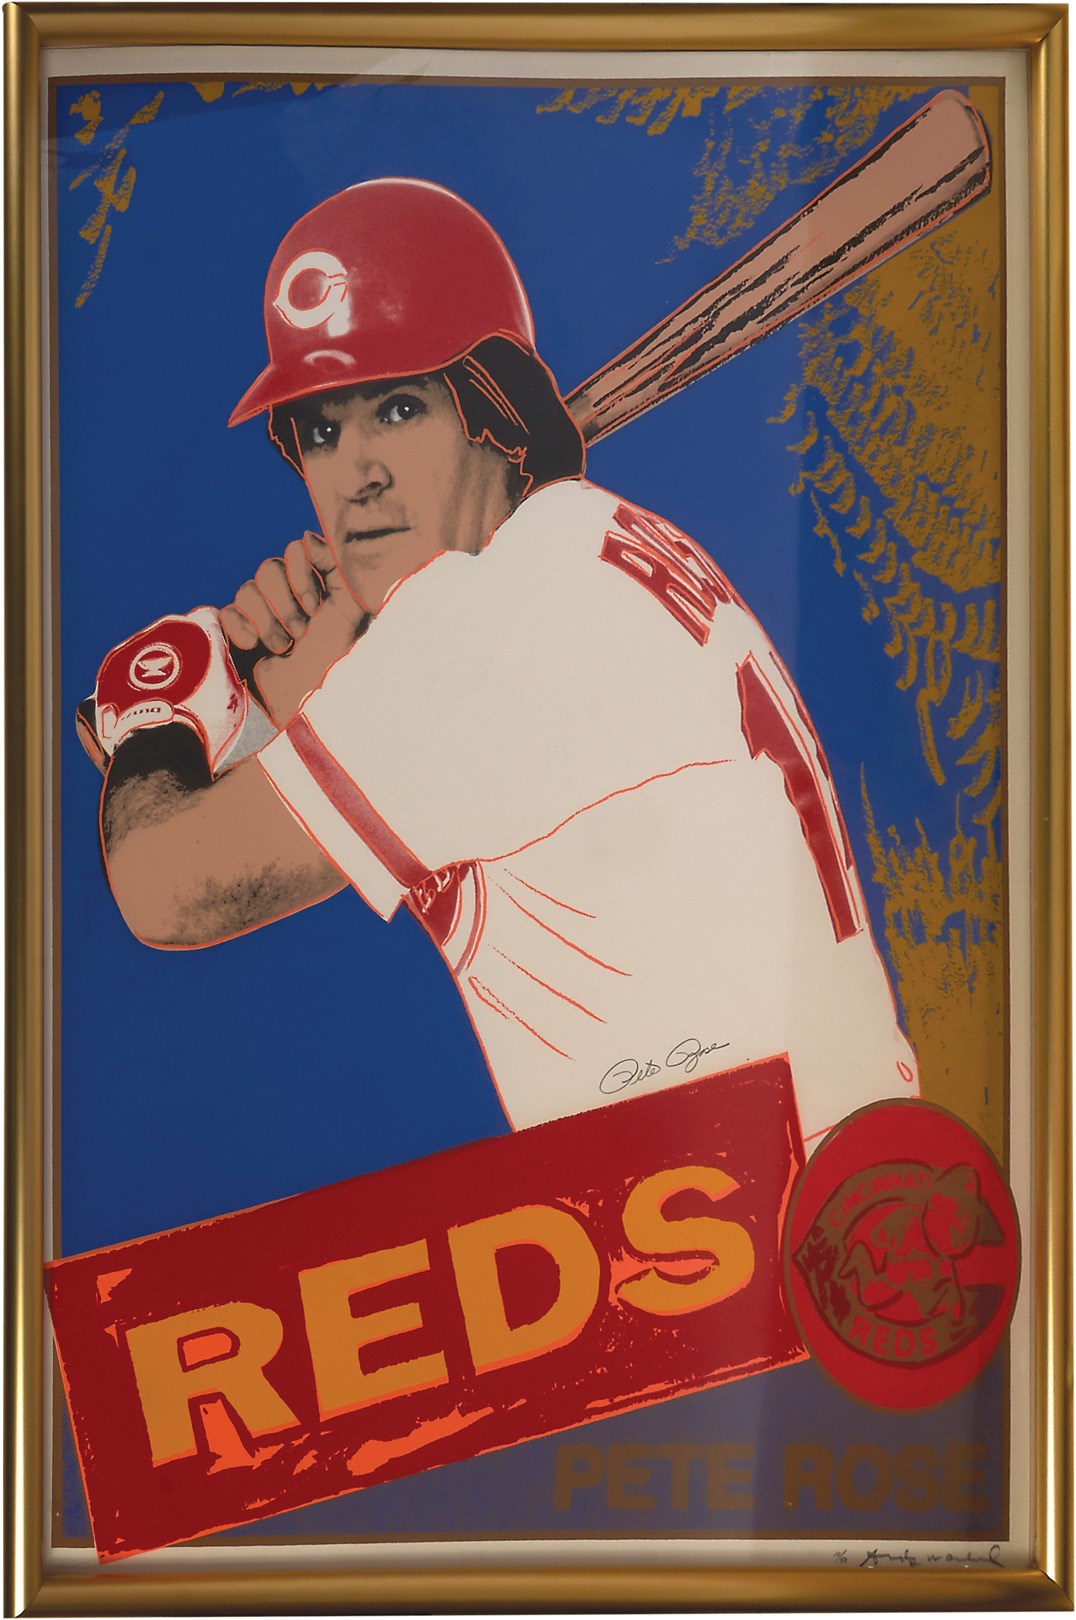 Pete Rose & Cincinnati Reds - Pete Rose Original Silkscreen by Andy Warhol (#10/50)